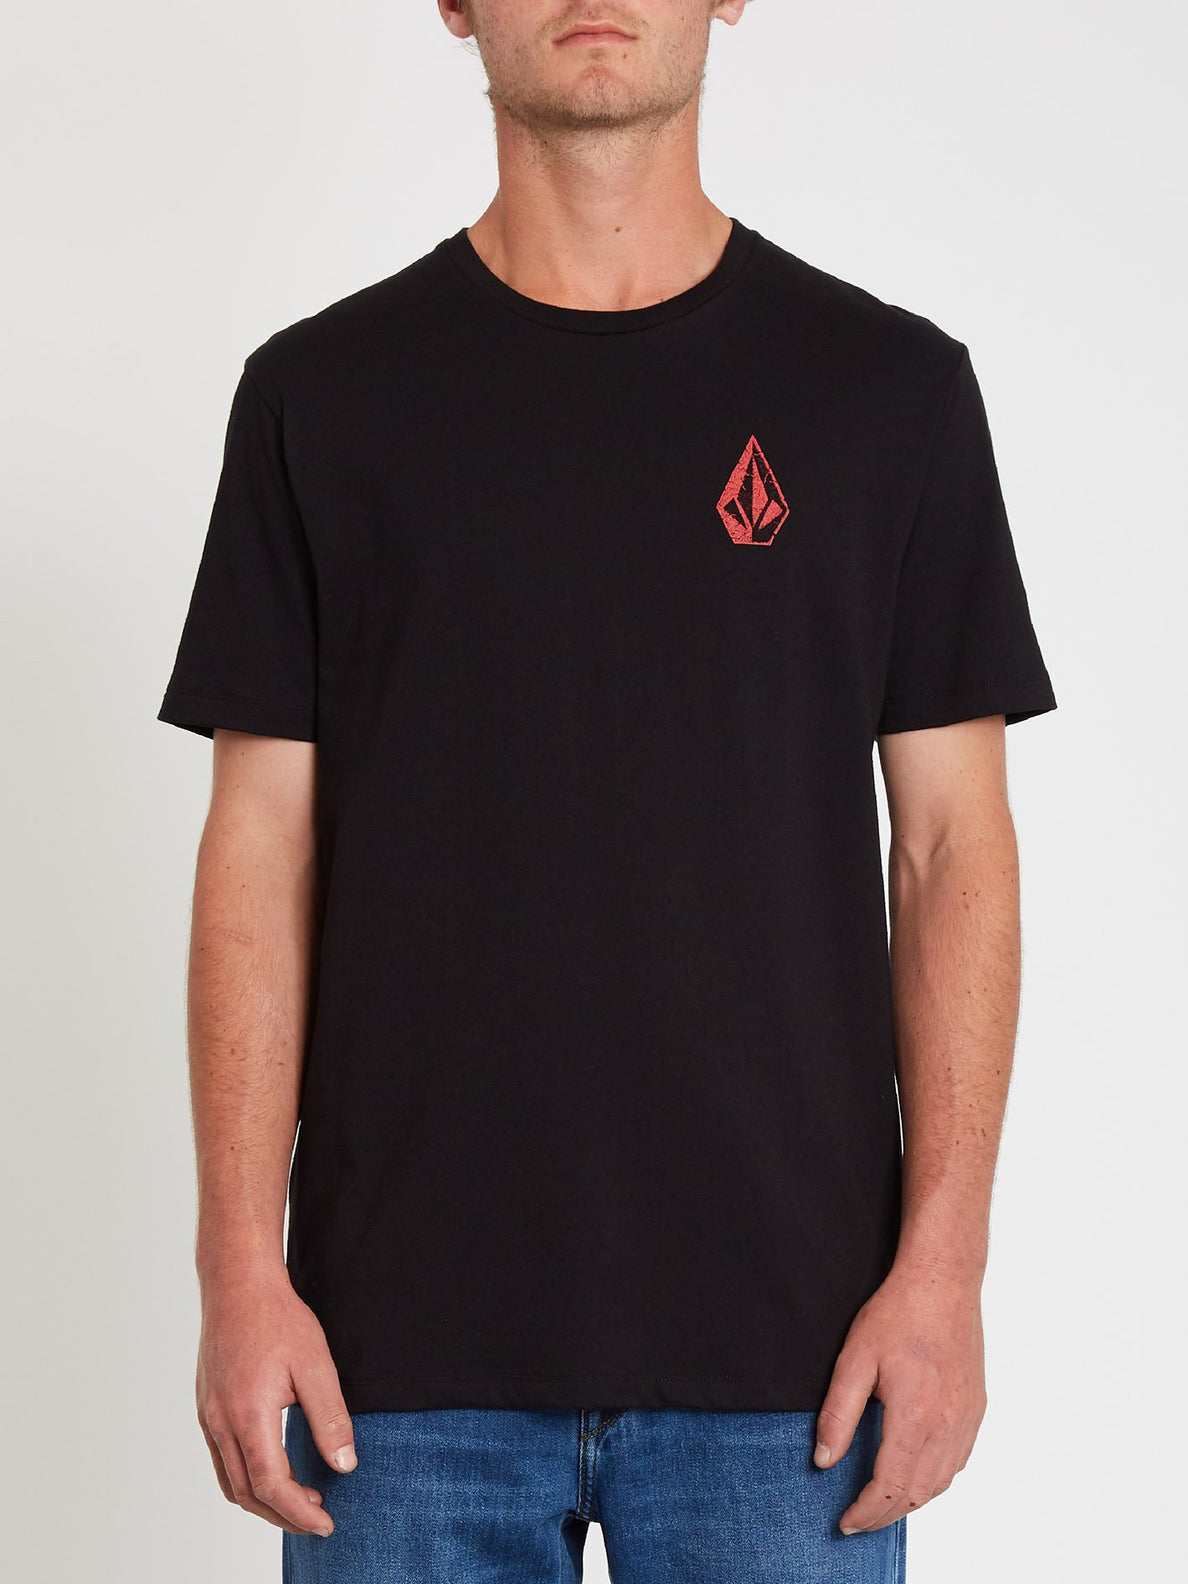 C. Vivary T-shirt - Black (A5212106_BLK) [B]